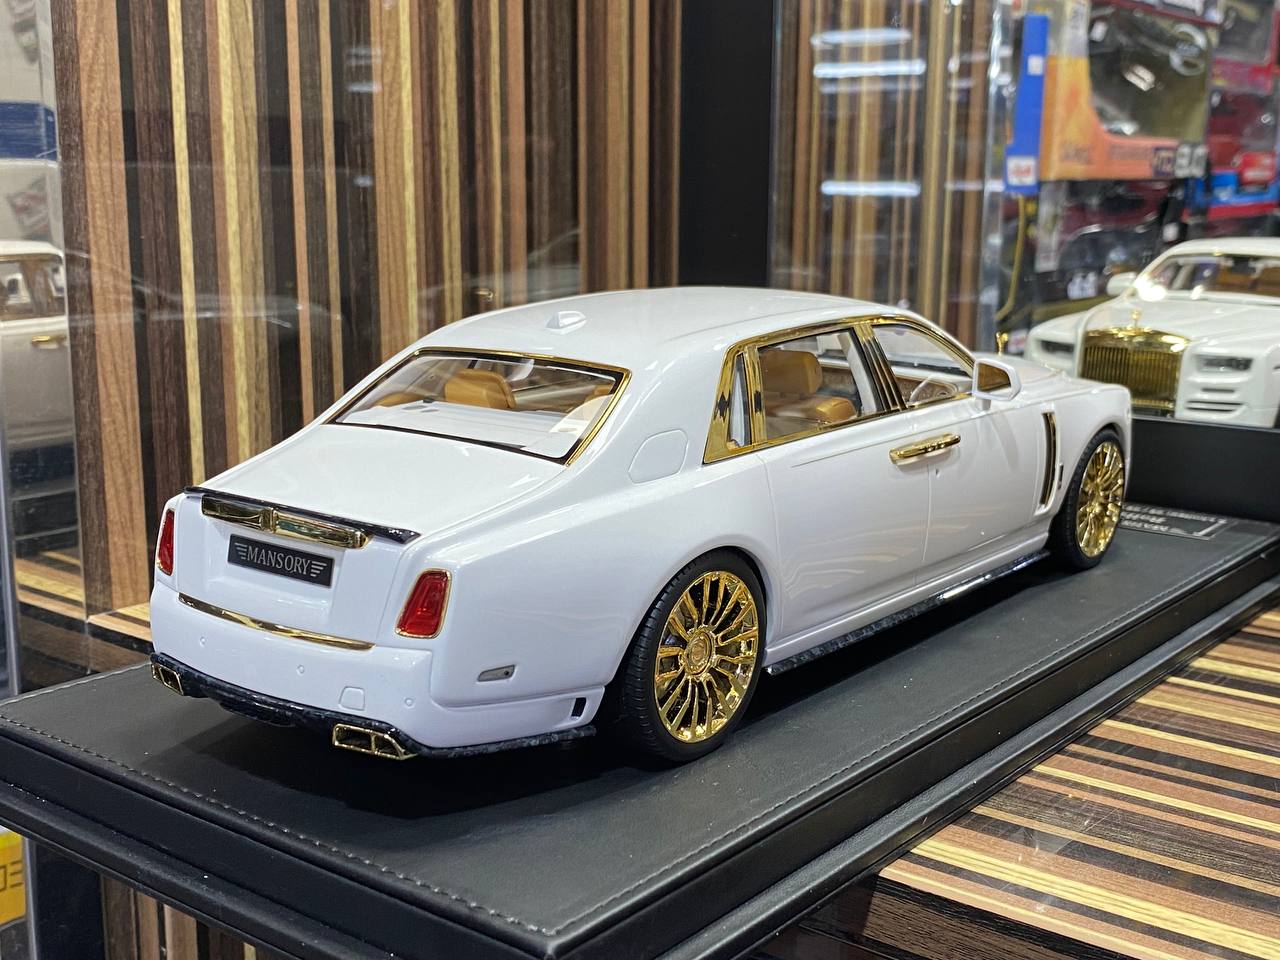 1/18 Resin Muse’s Secret  Rolls Royce- PHANTOM VIII Mansory Pearl White and Gold Scale Model Car|Sold in Dturman.com Dubai UAE.